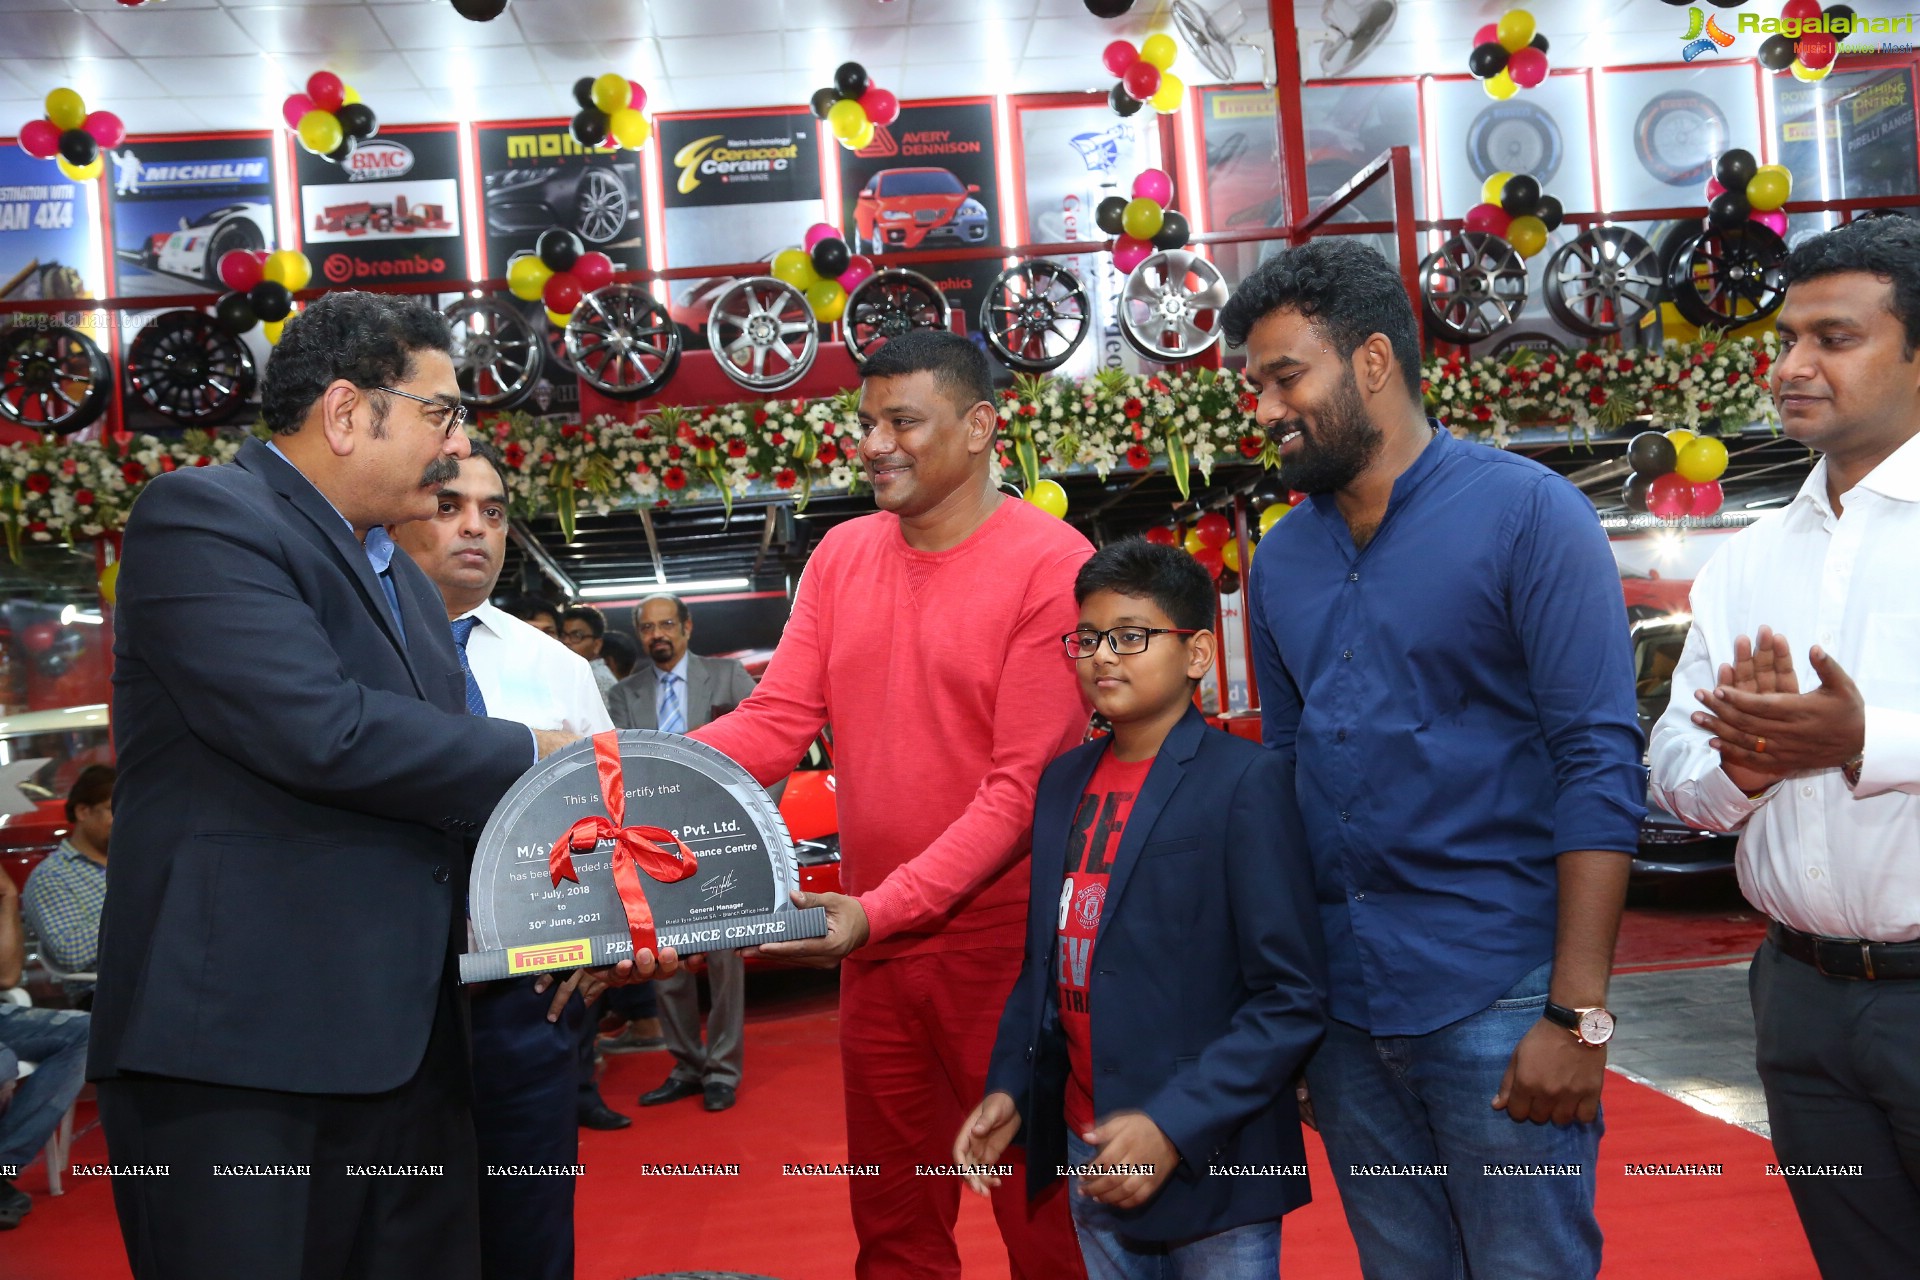 Grand Launch of Xenex Automotives at Ayyappa Society, Madhapur, Hyderabad